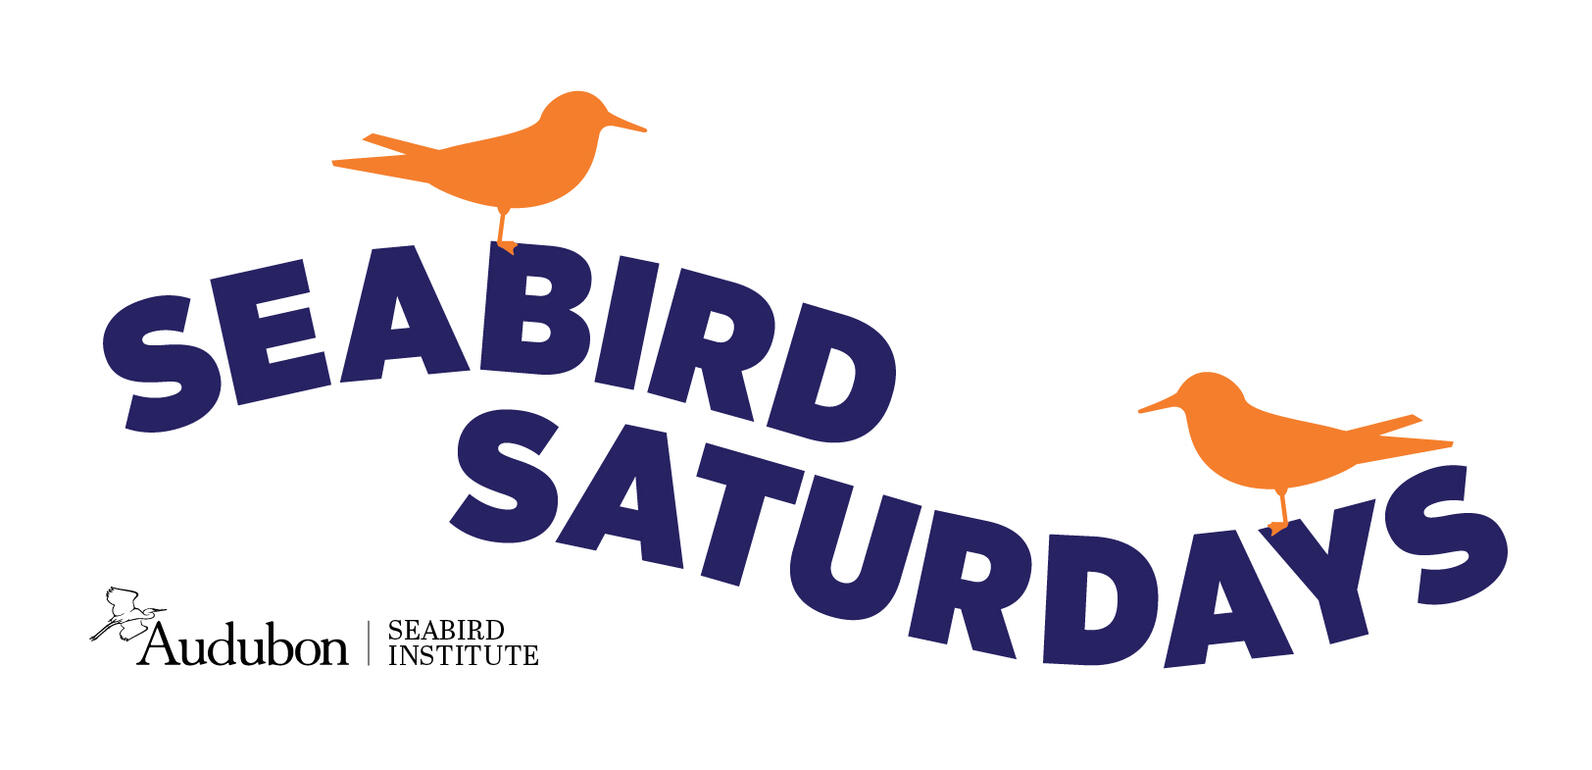 Seabird Saturdays